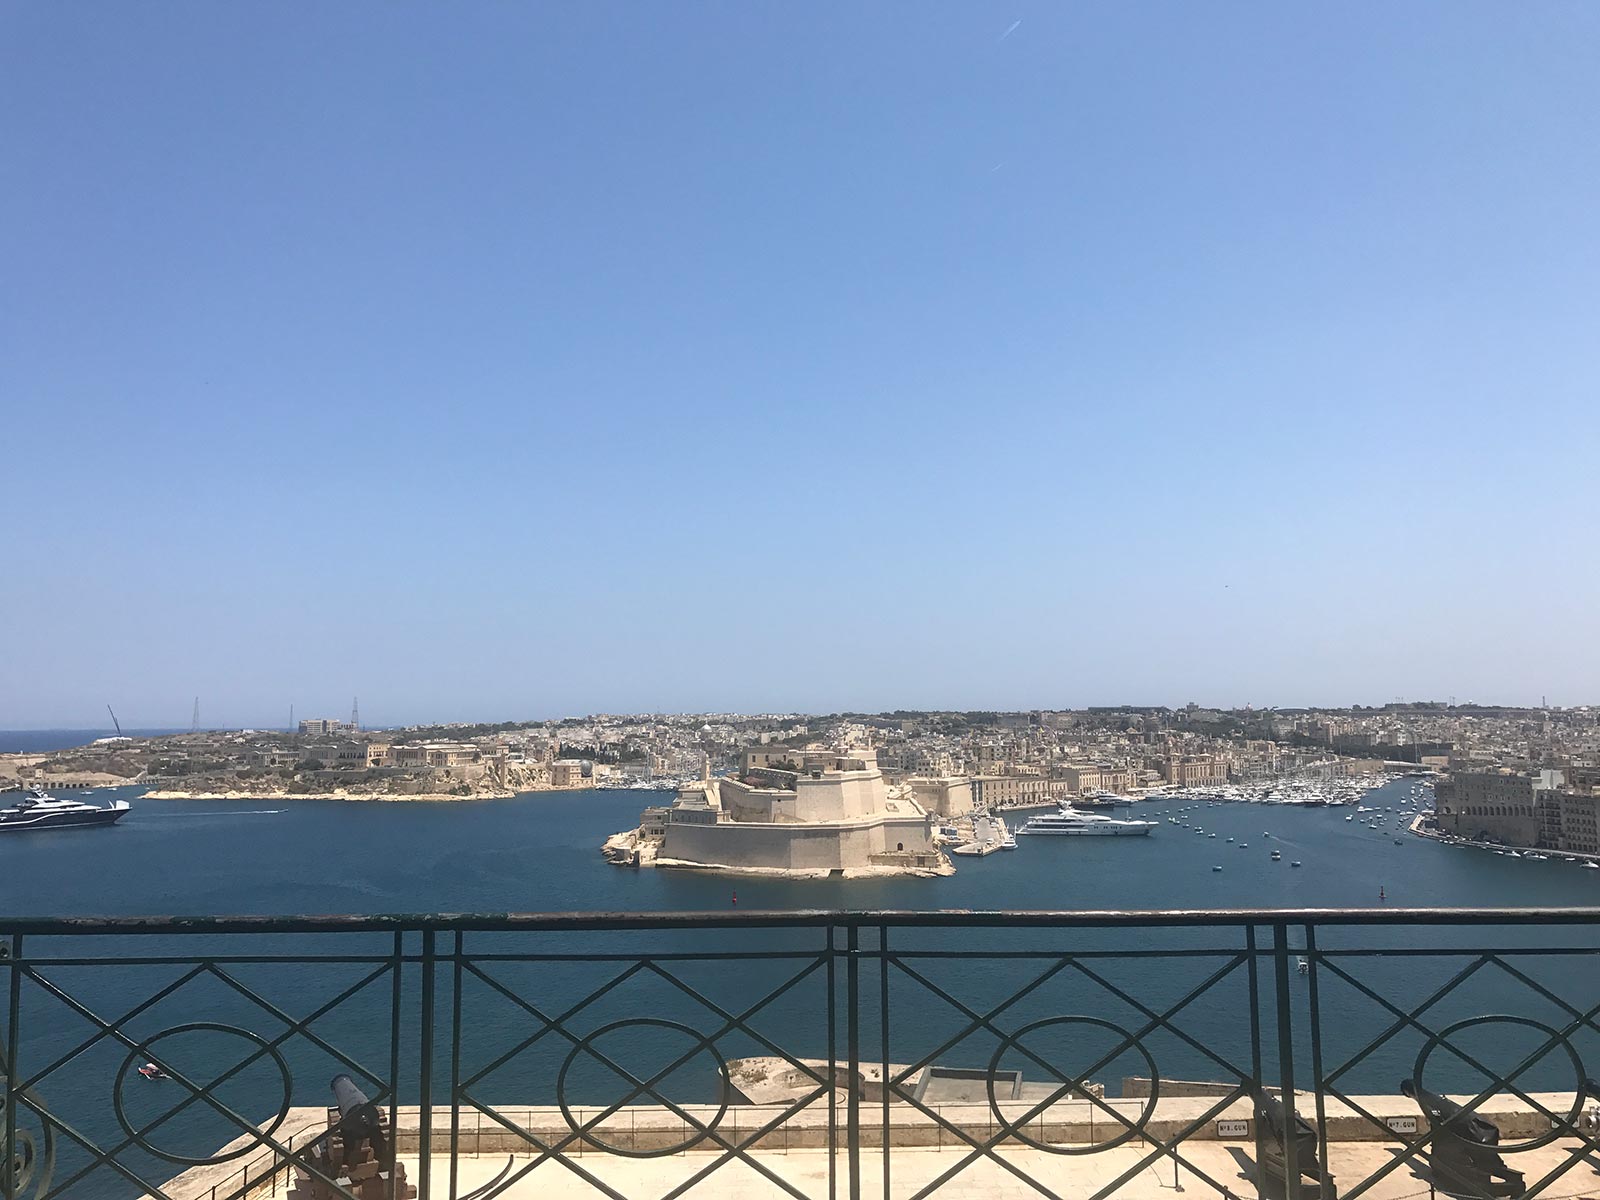 Fort in the middle of the Port of Valletta in Valletta, Malta. Andorra, Barcelona & Malta